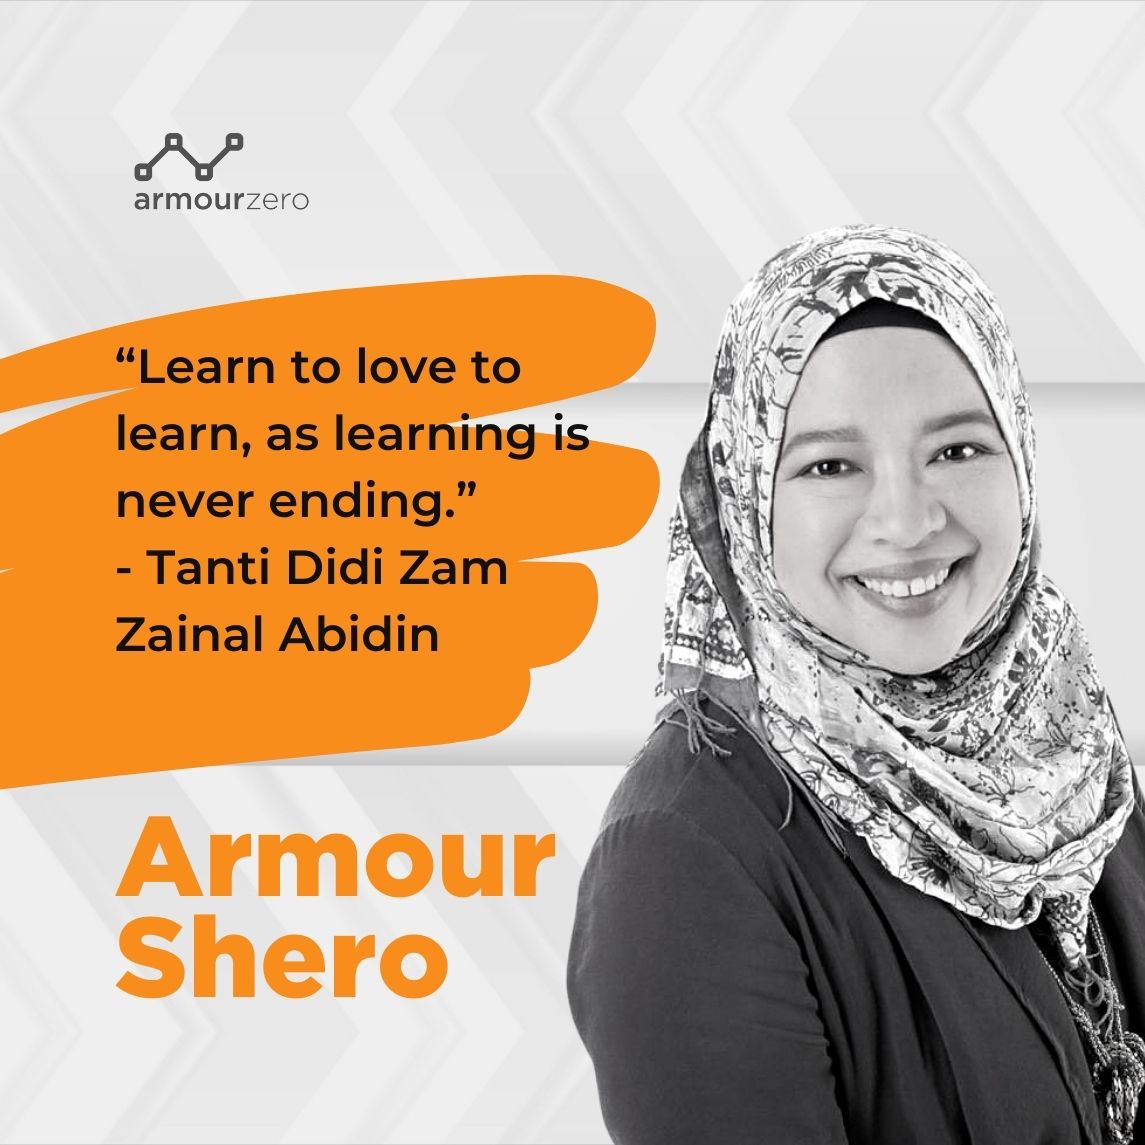 Tanti Didi Zam Zainal Abidin's Quote for ArmourShero blog